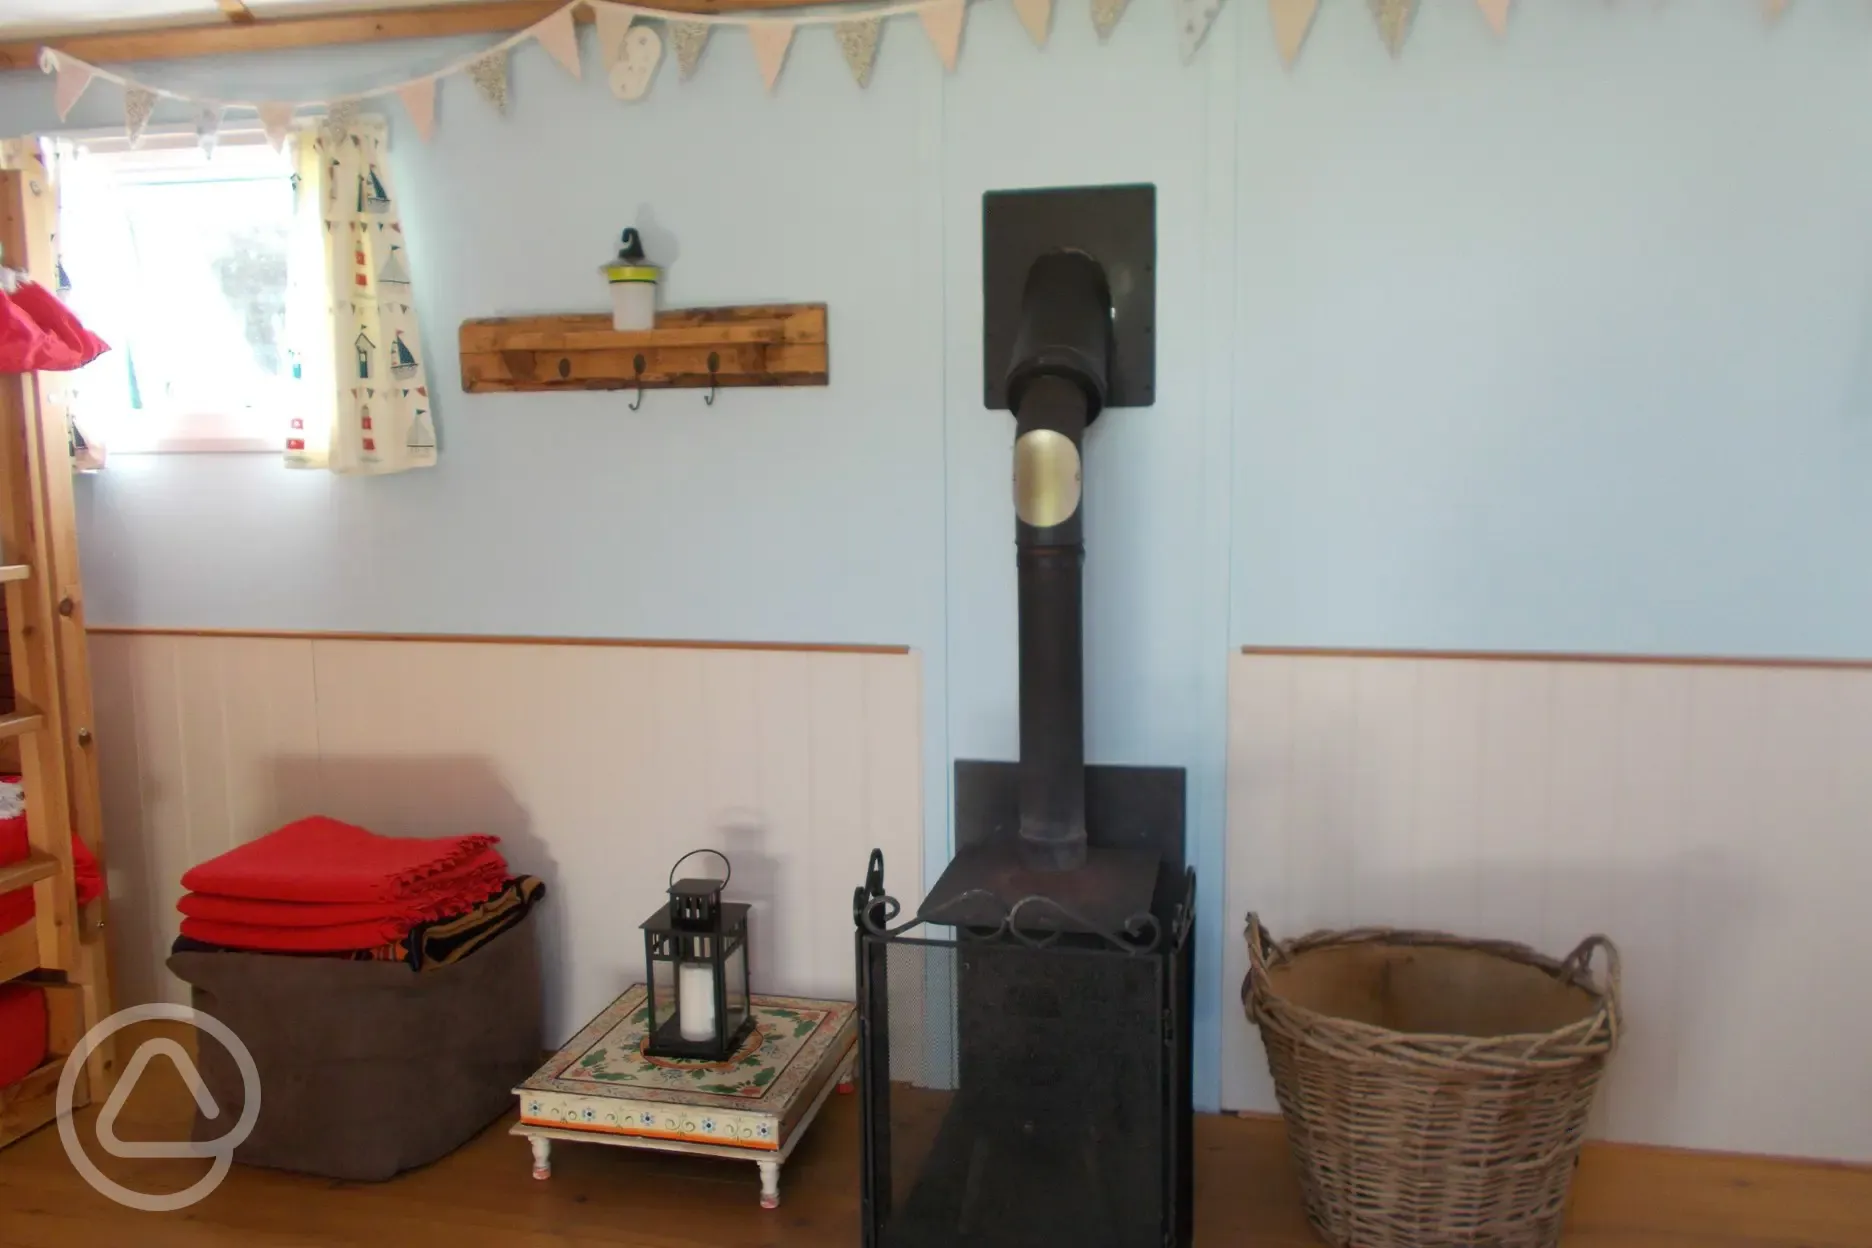 Shepherds hut interior - wood burning stove